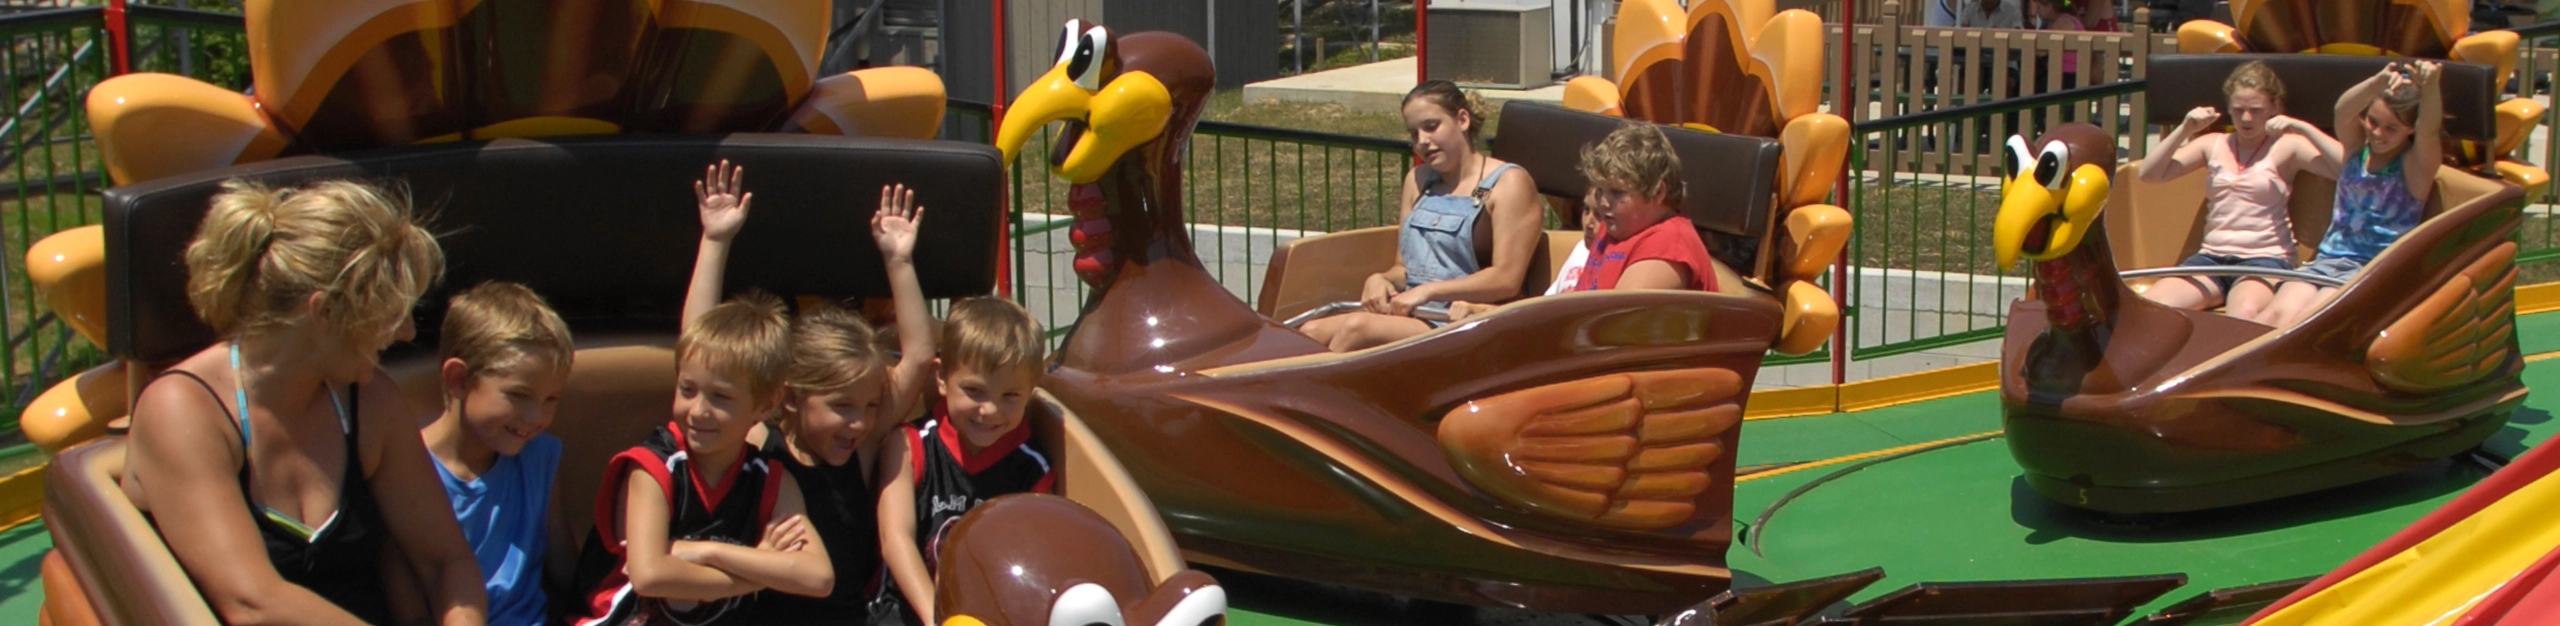 Turkey Whirl at Holiday World & Splashin' Safari in Santa Claus, Indiana.